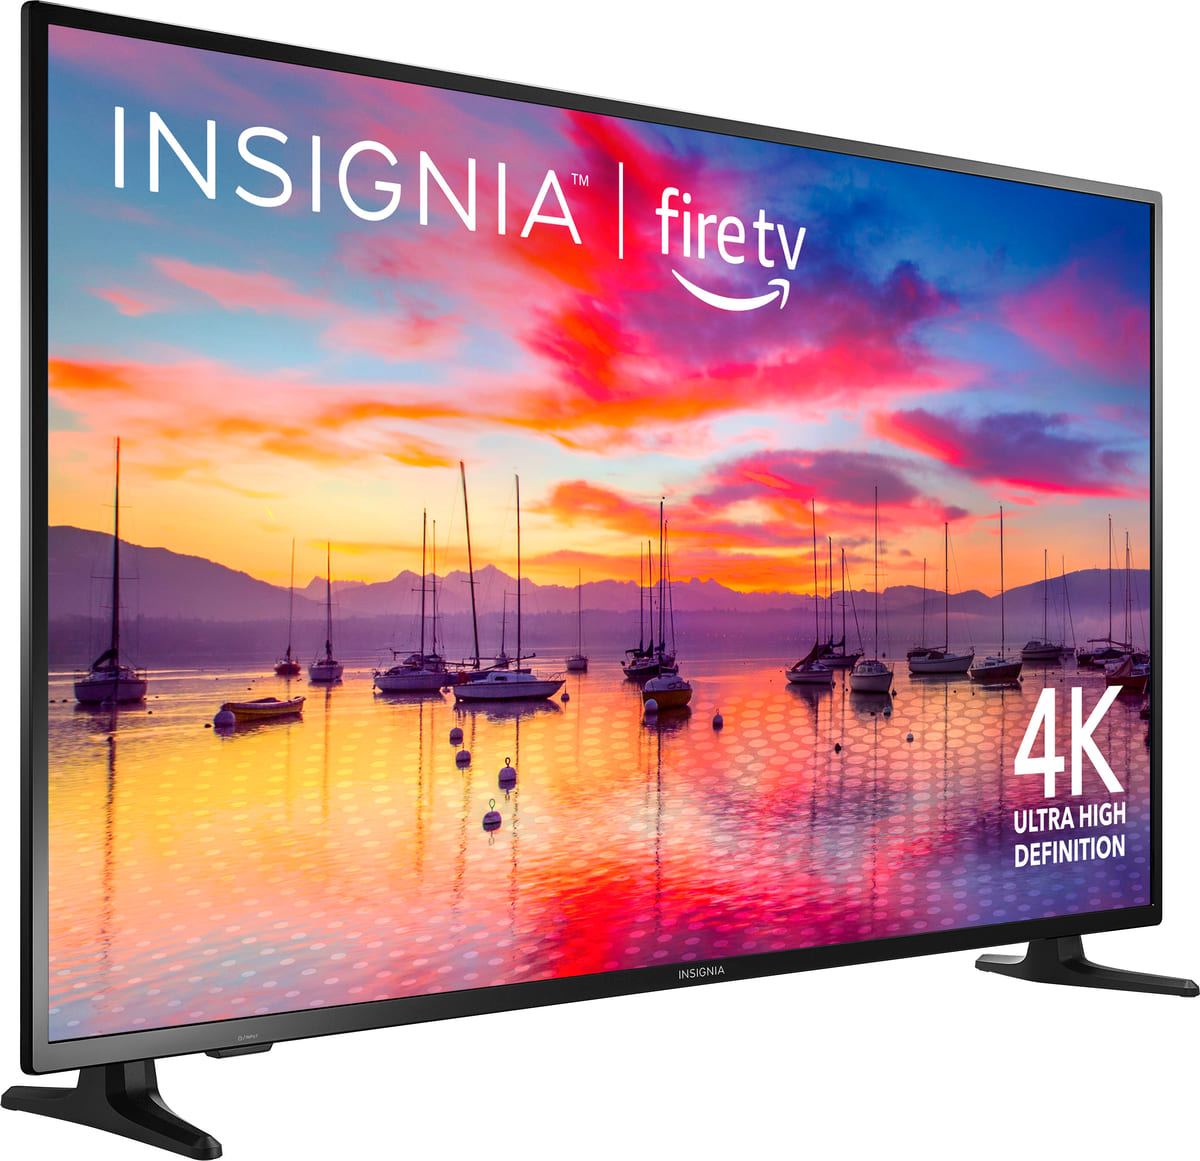 Insignia - Class F30 Series LED 4K UHD Smart Fire TV